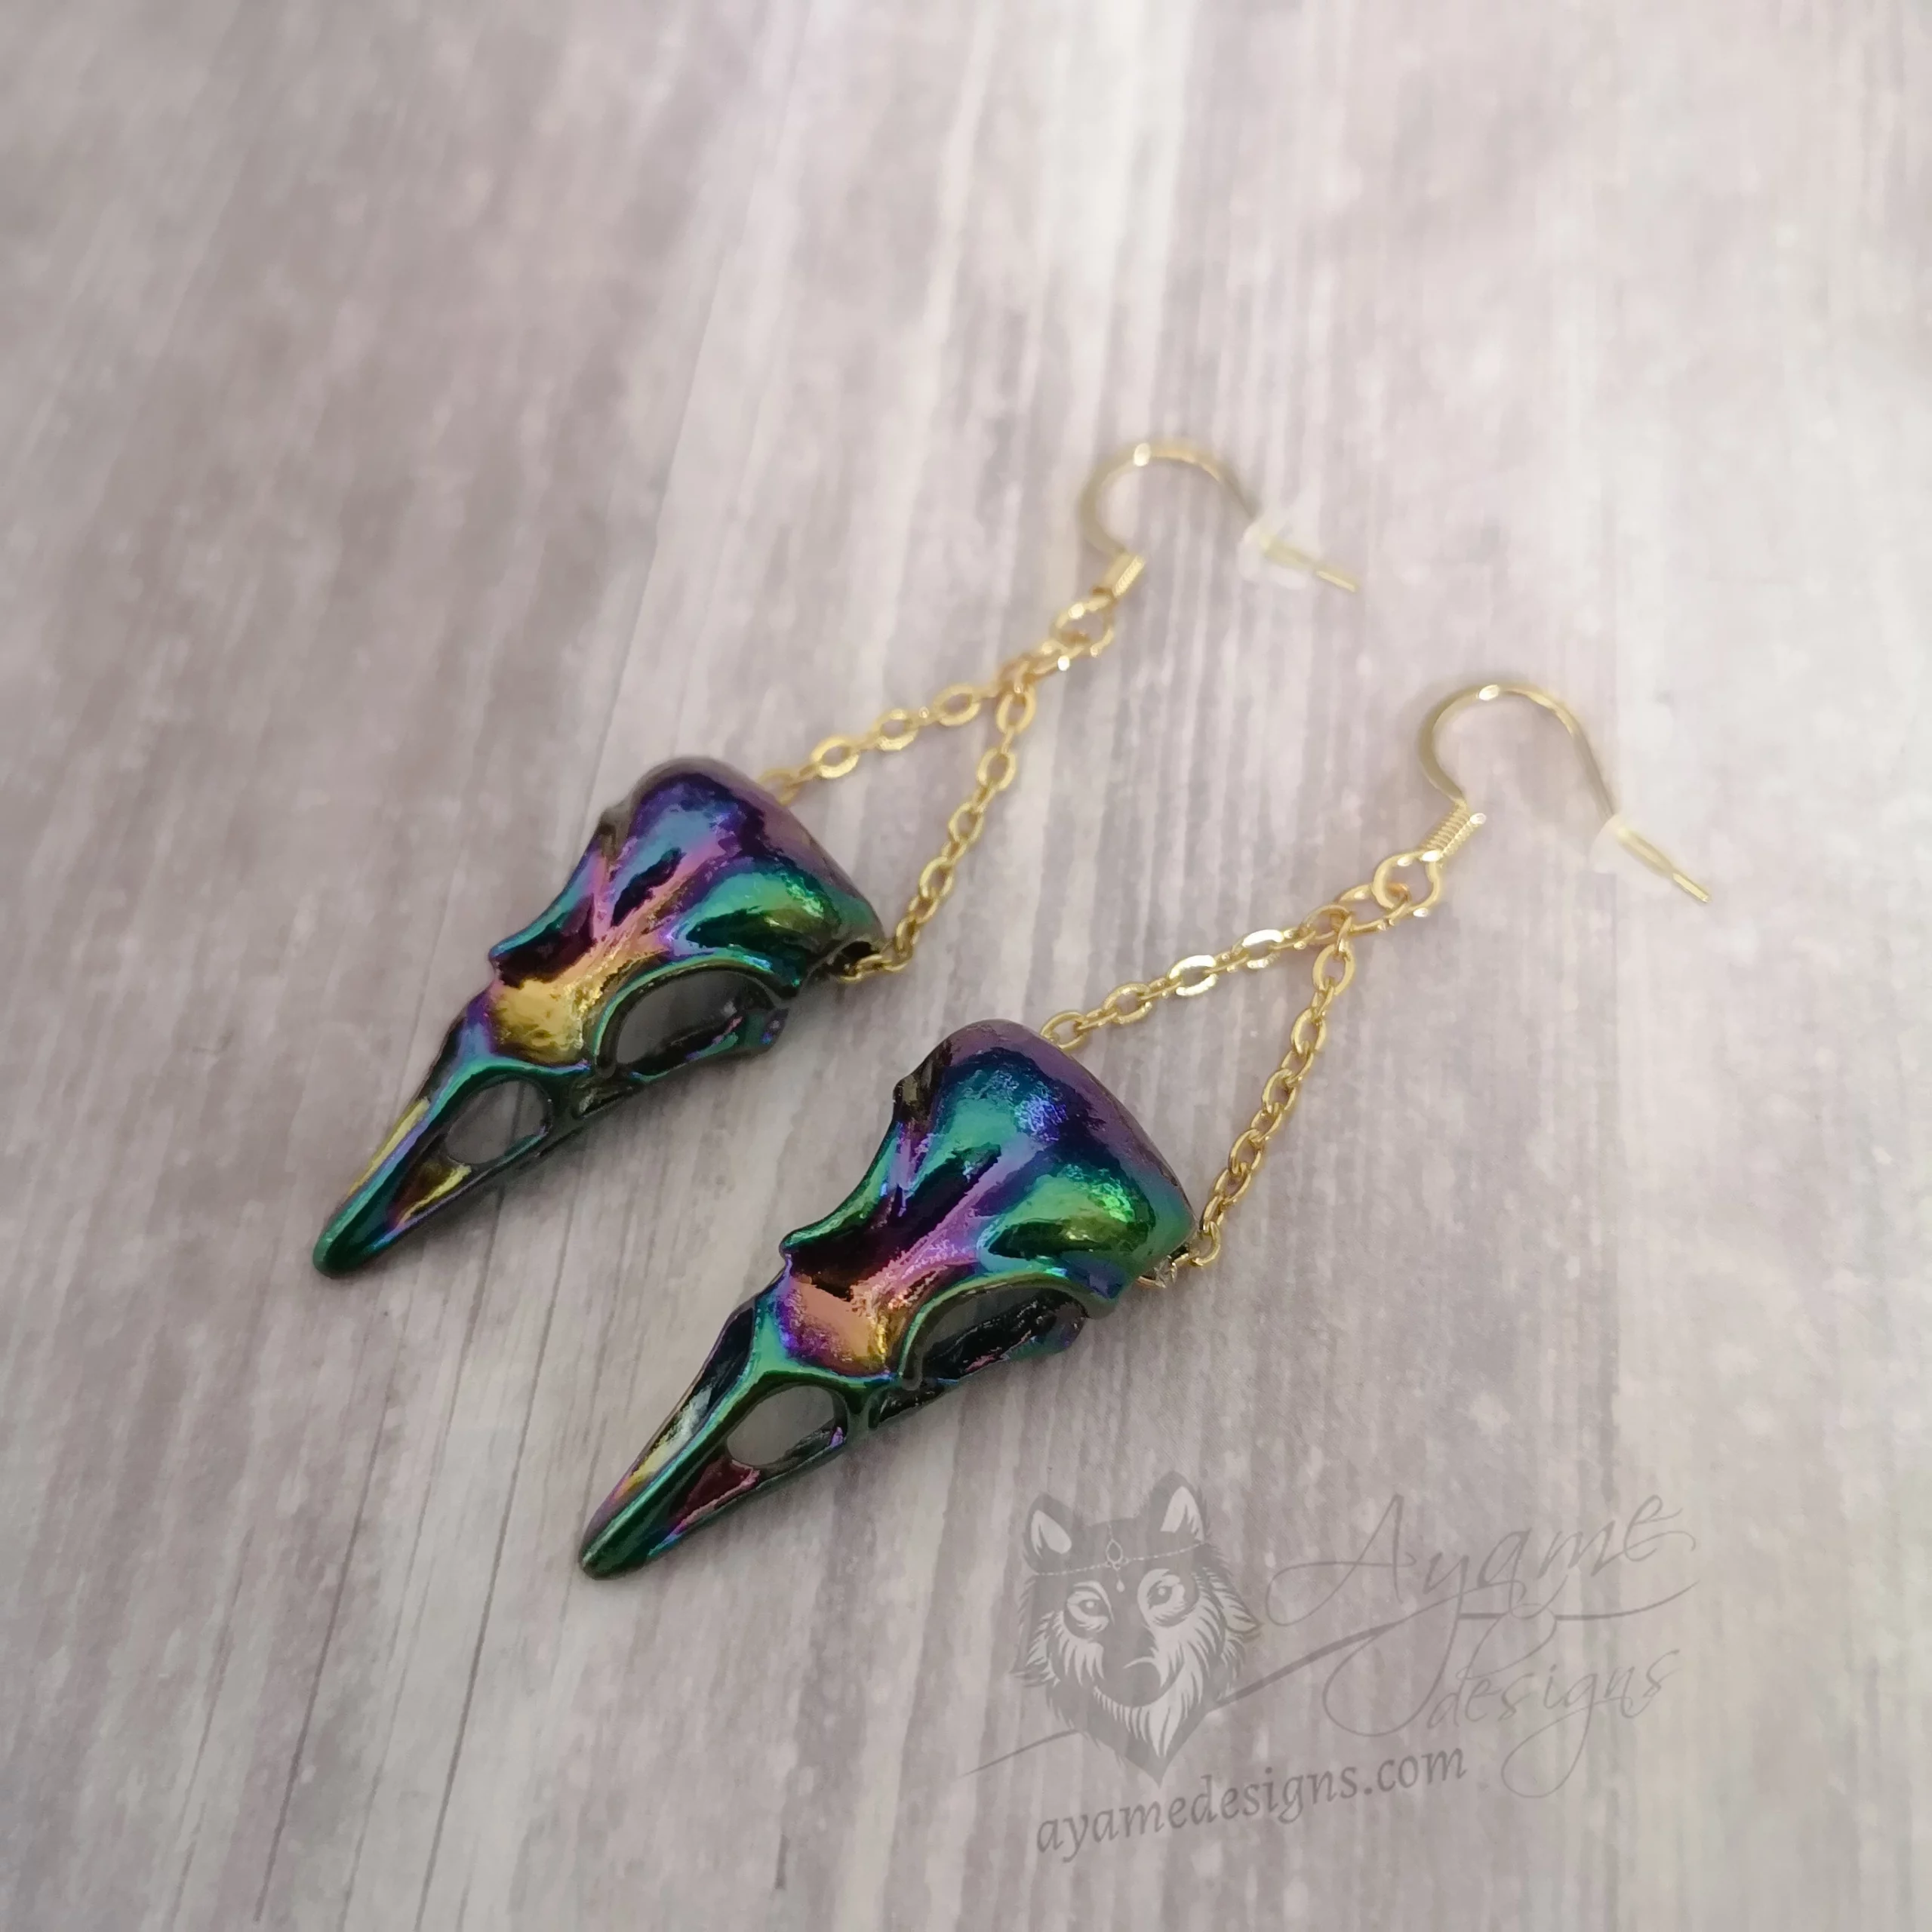 Earrings with rainbow bird skull pendants hanging on gold stainless steel chain, on gold stainless steel earring hooks